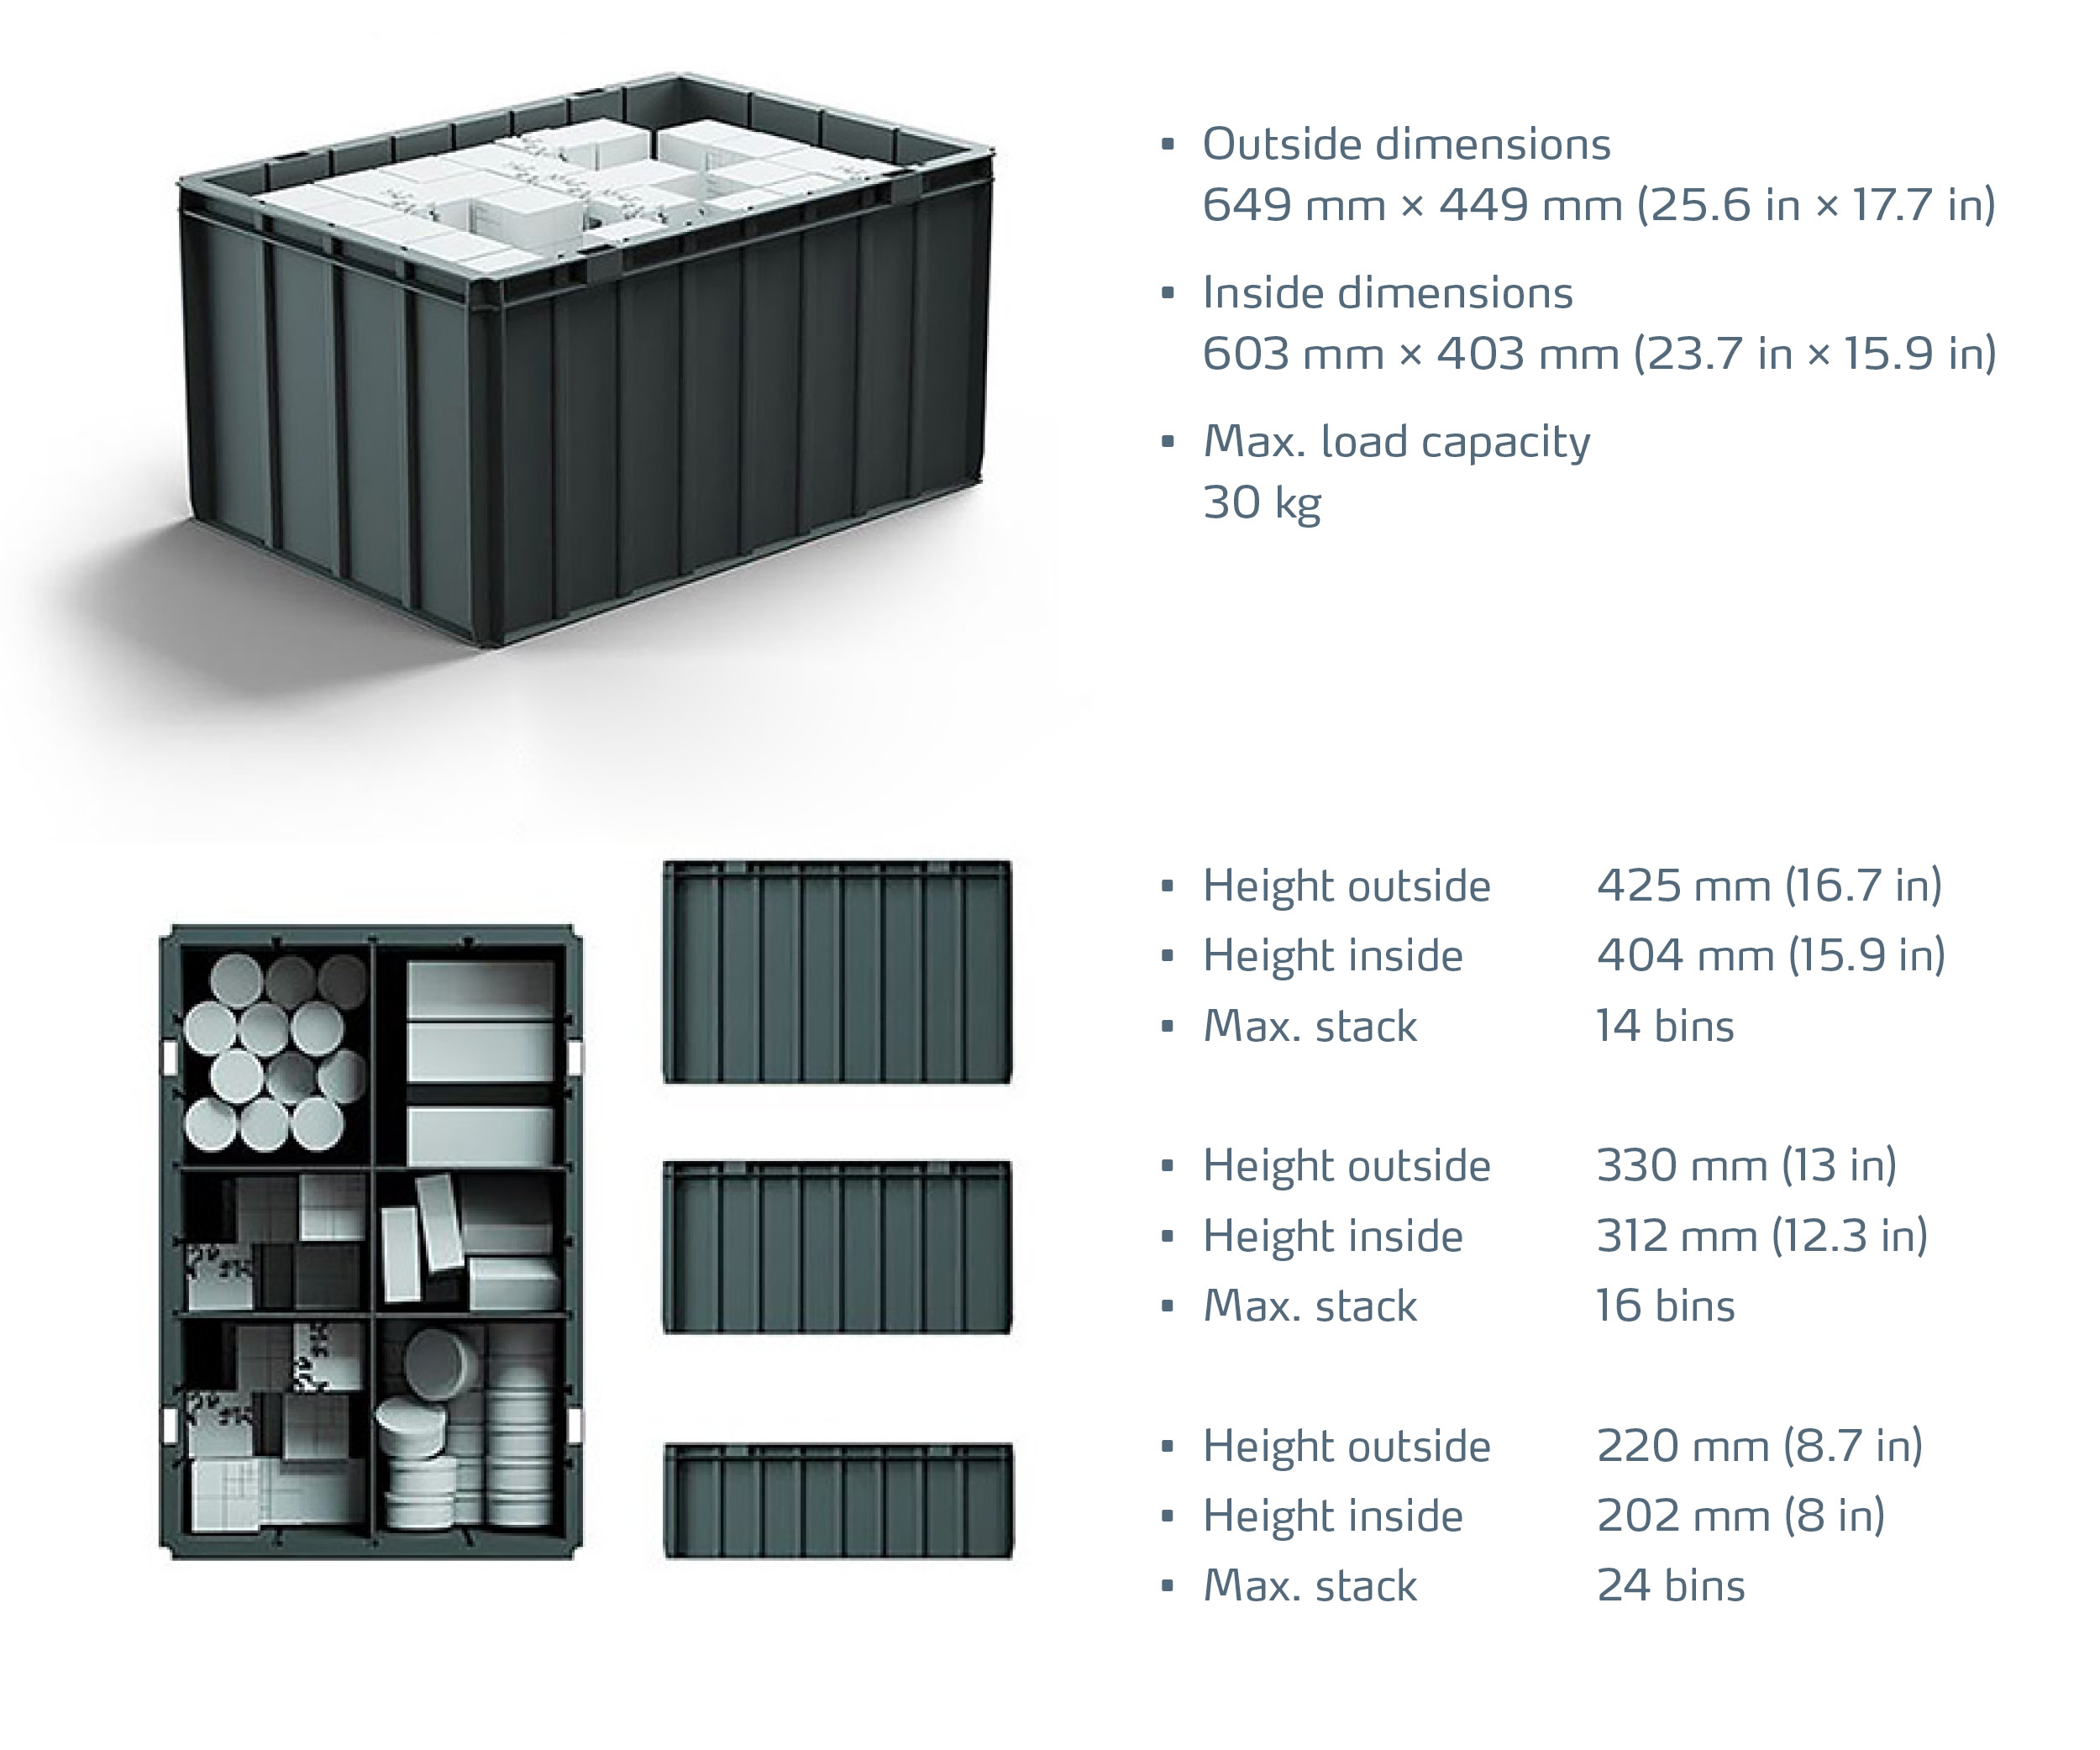 Kardex AutoStore Bin dimensions sizes